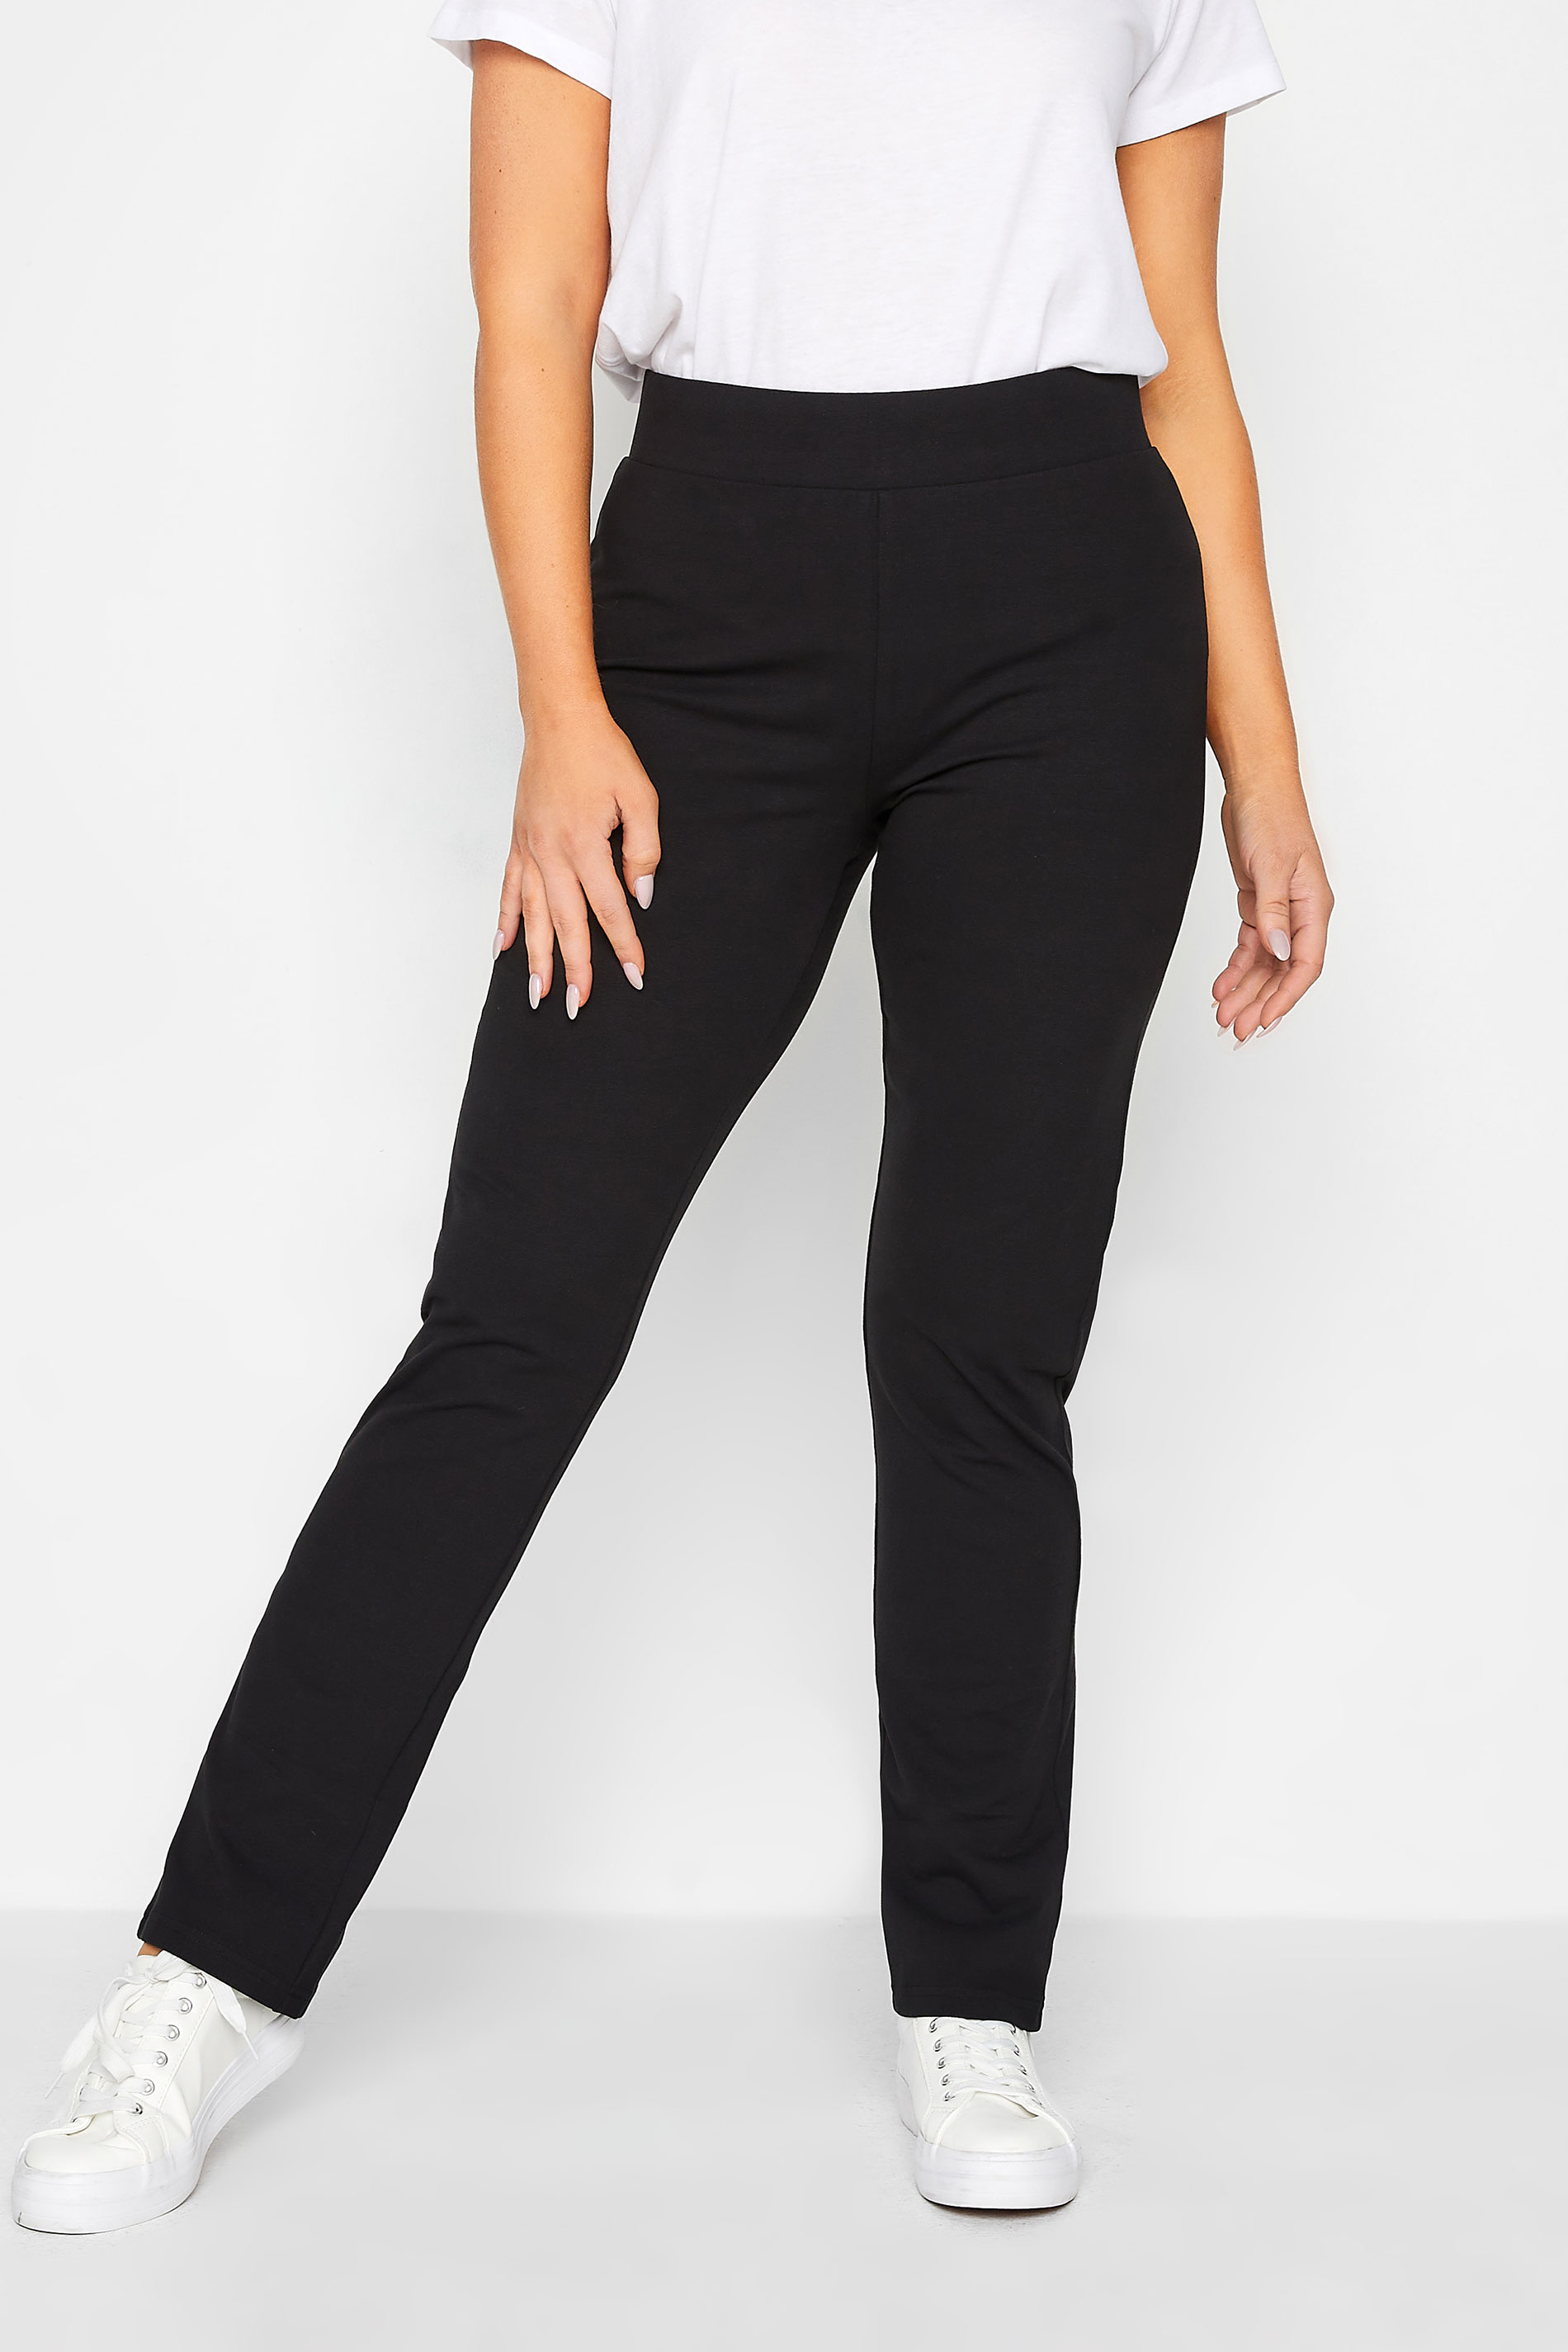 M&Co Black Slim Leg Yoga Pants | M&Co